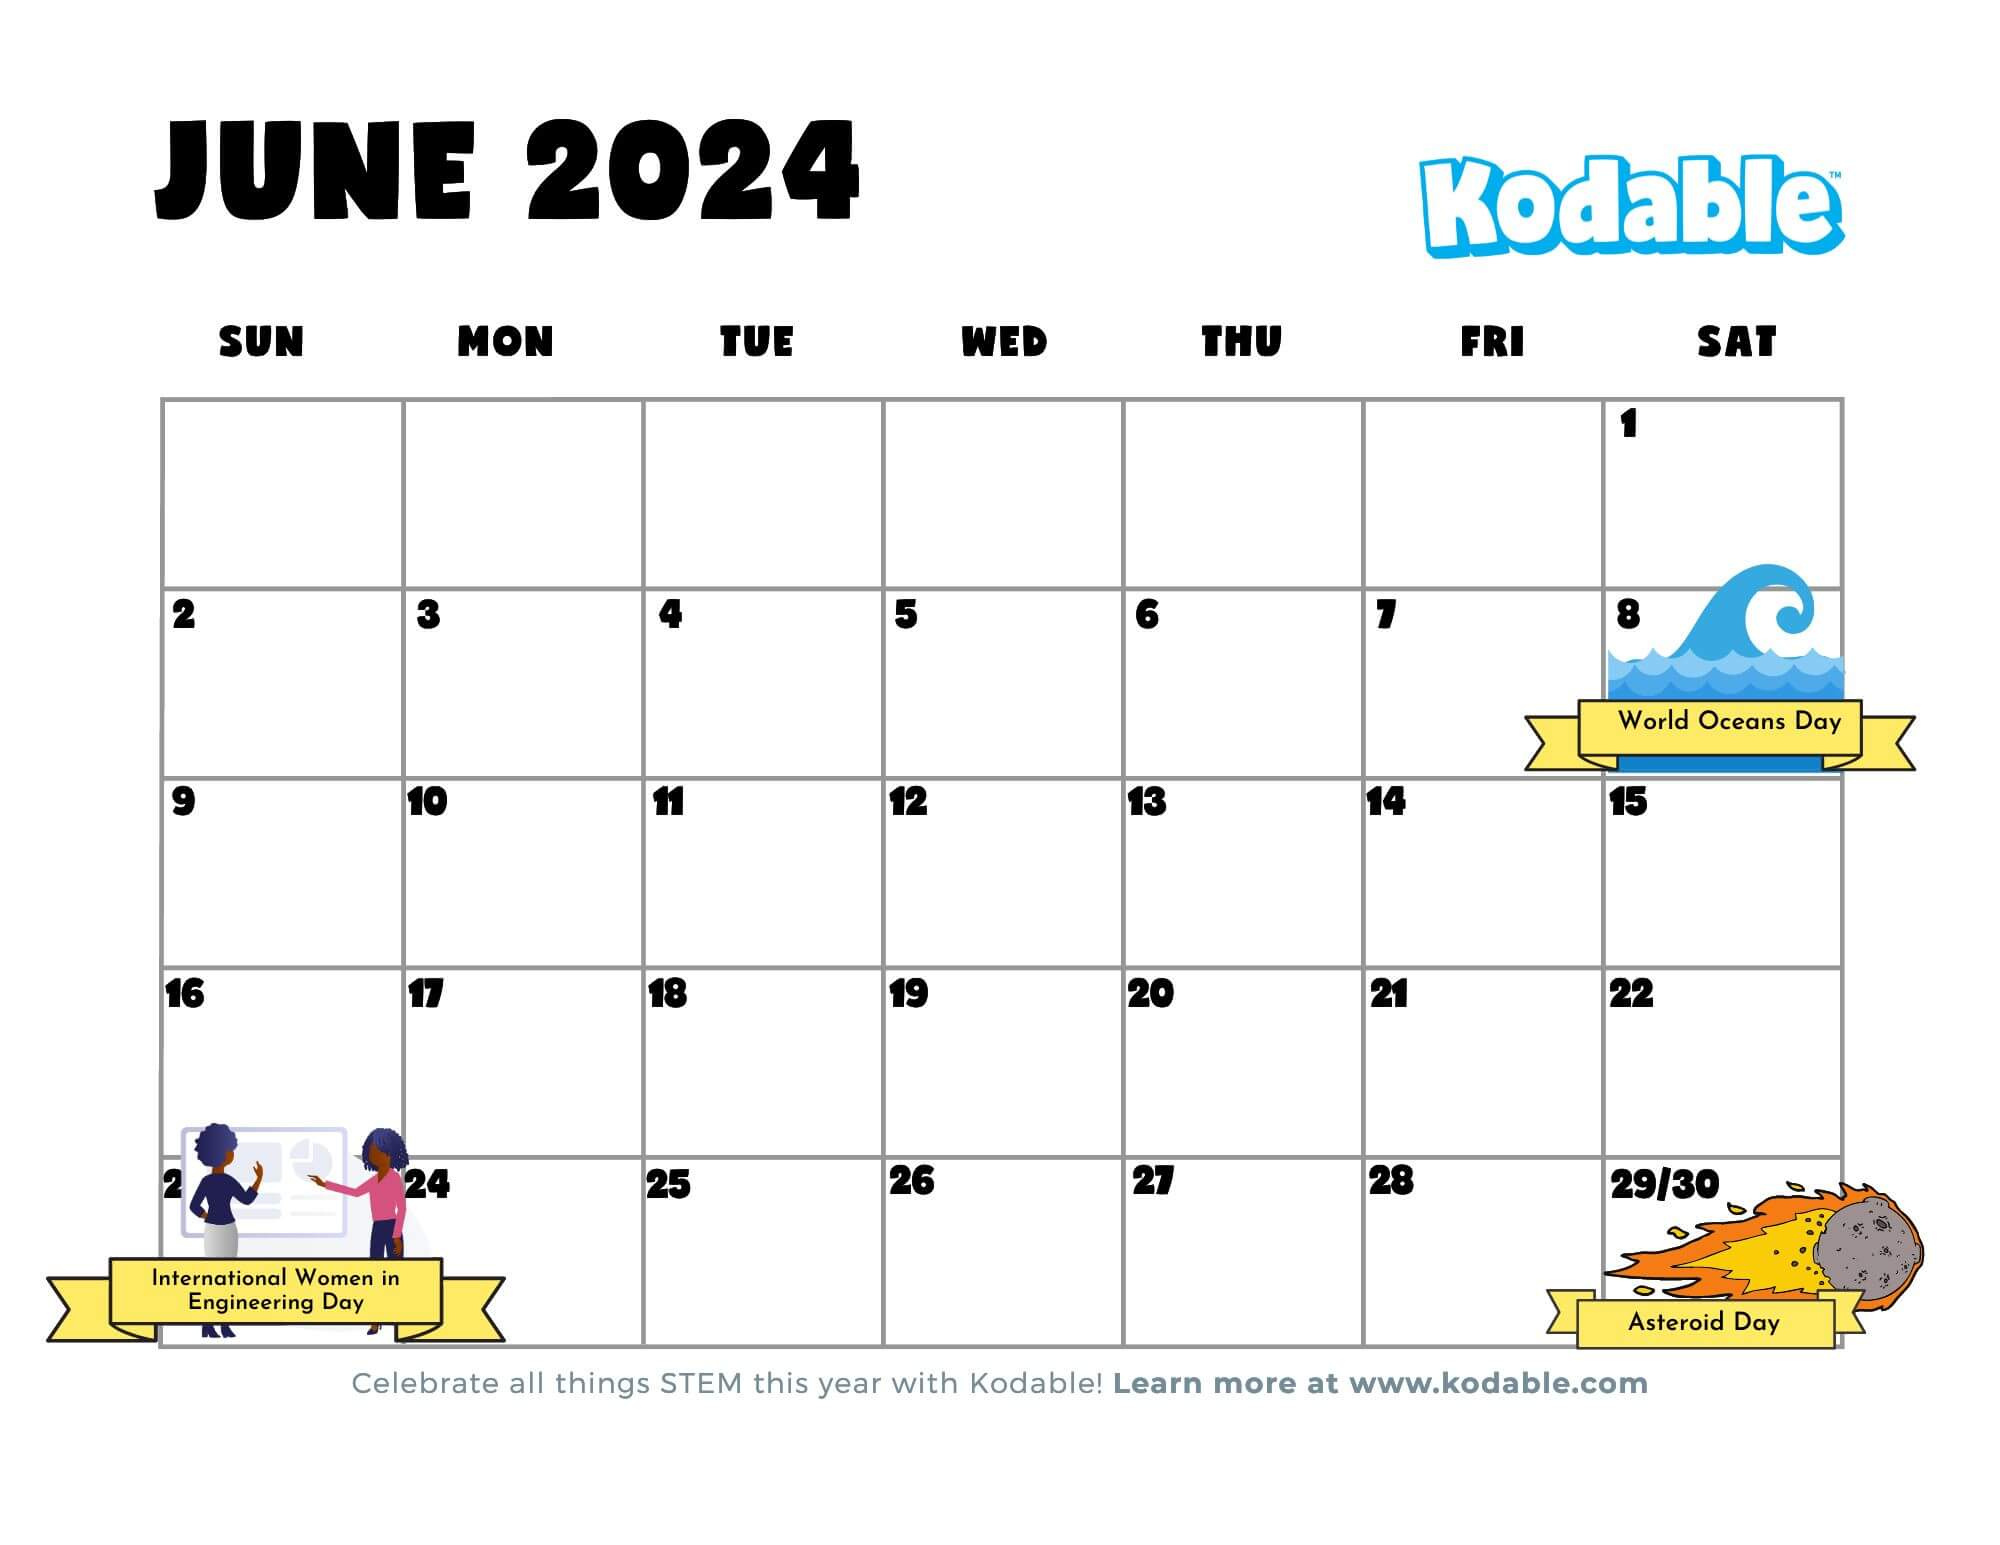 2023-2024 Stem Events Calendar And Holidays For Teachers | Kodable with June Calendar Events 2024